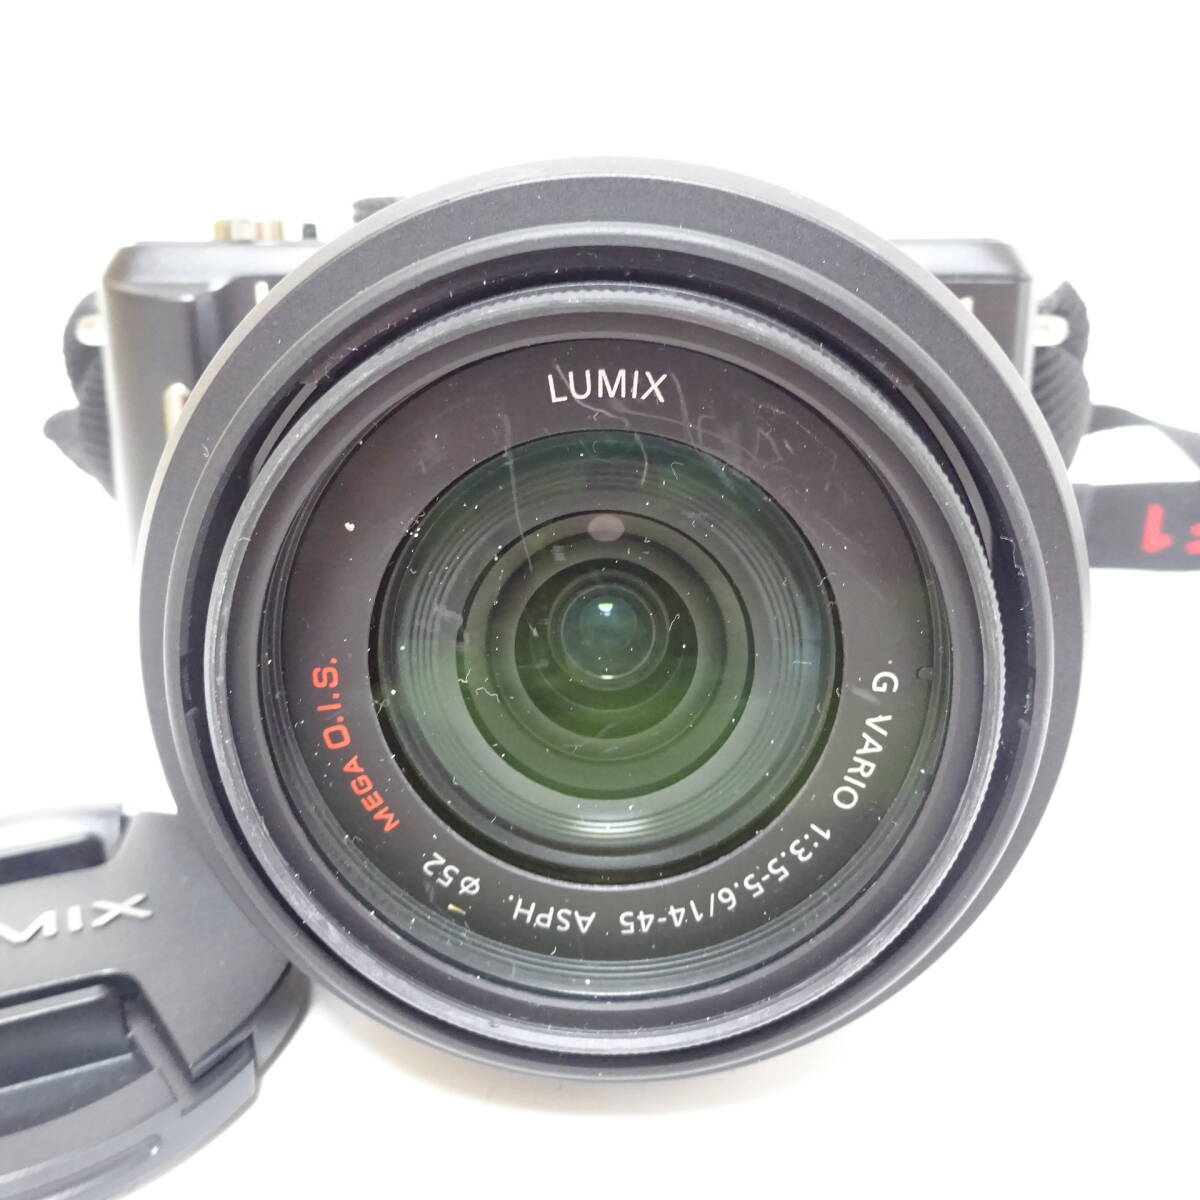  Panasonic LUMIX DMC-GF1 digital camera 1:3.5-5.6/14-45 lens Panasonic operation not yet verification junk 60 size shipping KK-2666749-209-mrrz